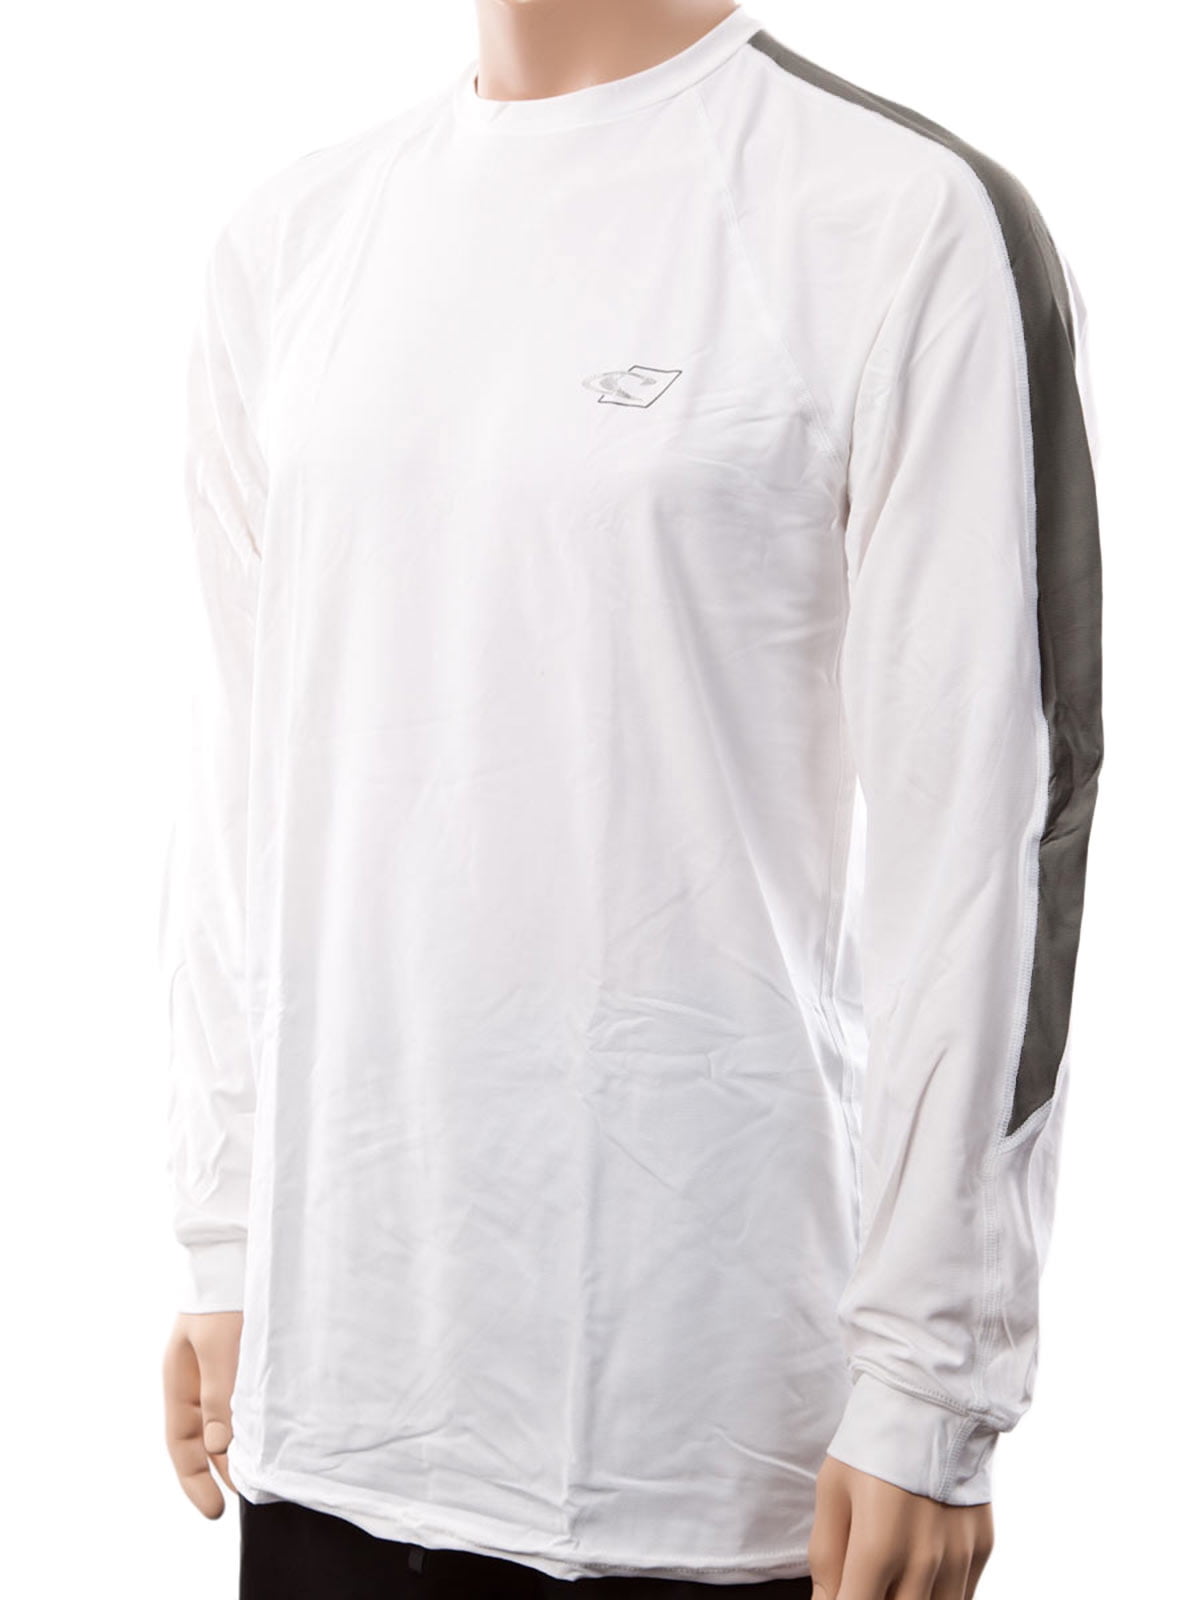 O'Neill men's Tech 24/7 long sleeve sun shirt Men's L White/graphite (4242)